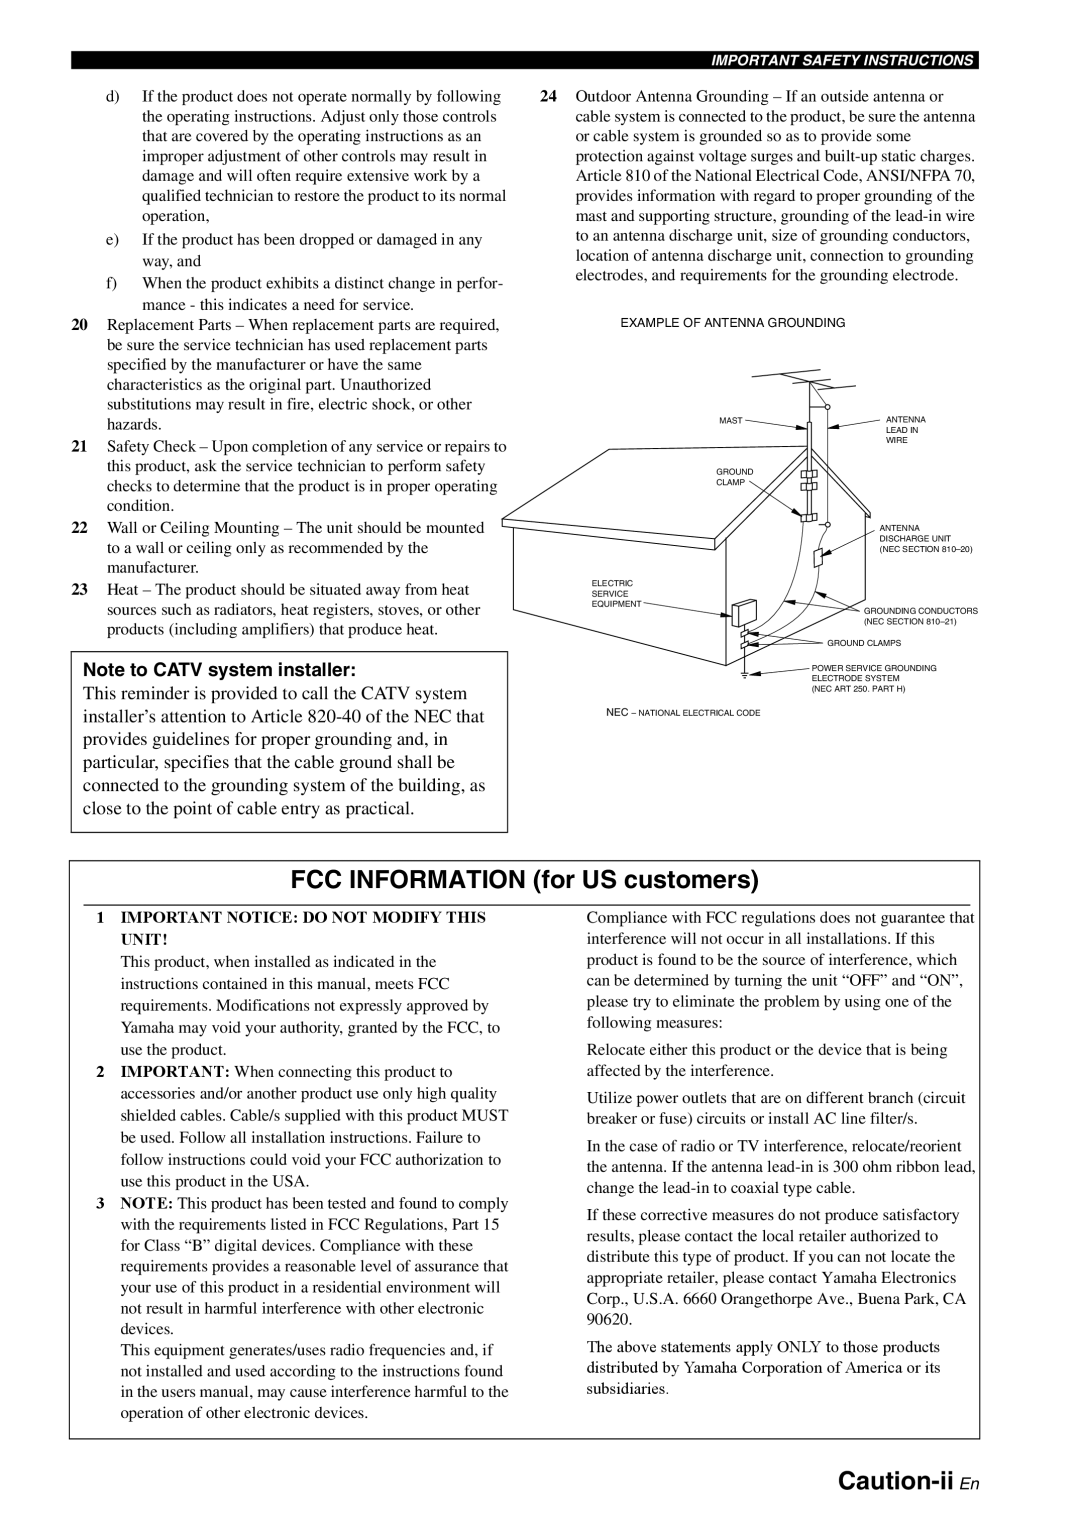 Yamaha HTR-6180 owner manual FCC INFORMATION for US customers, Caution-ii En, Note to CATV system installer 